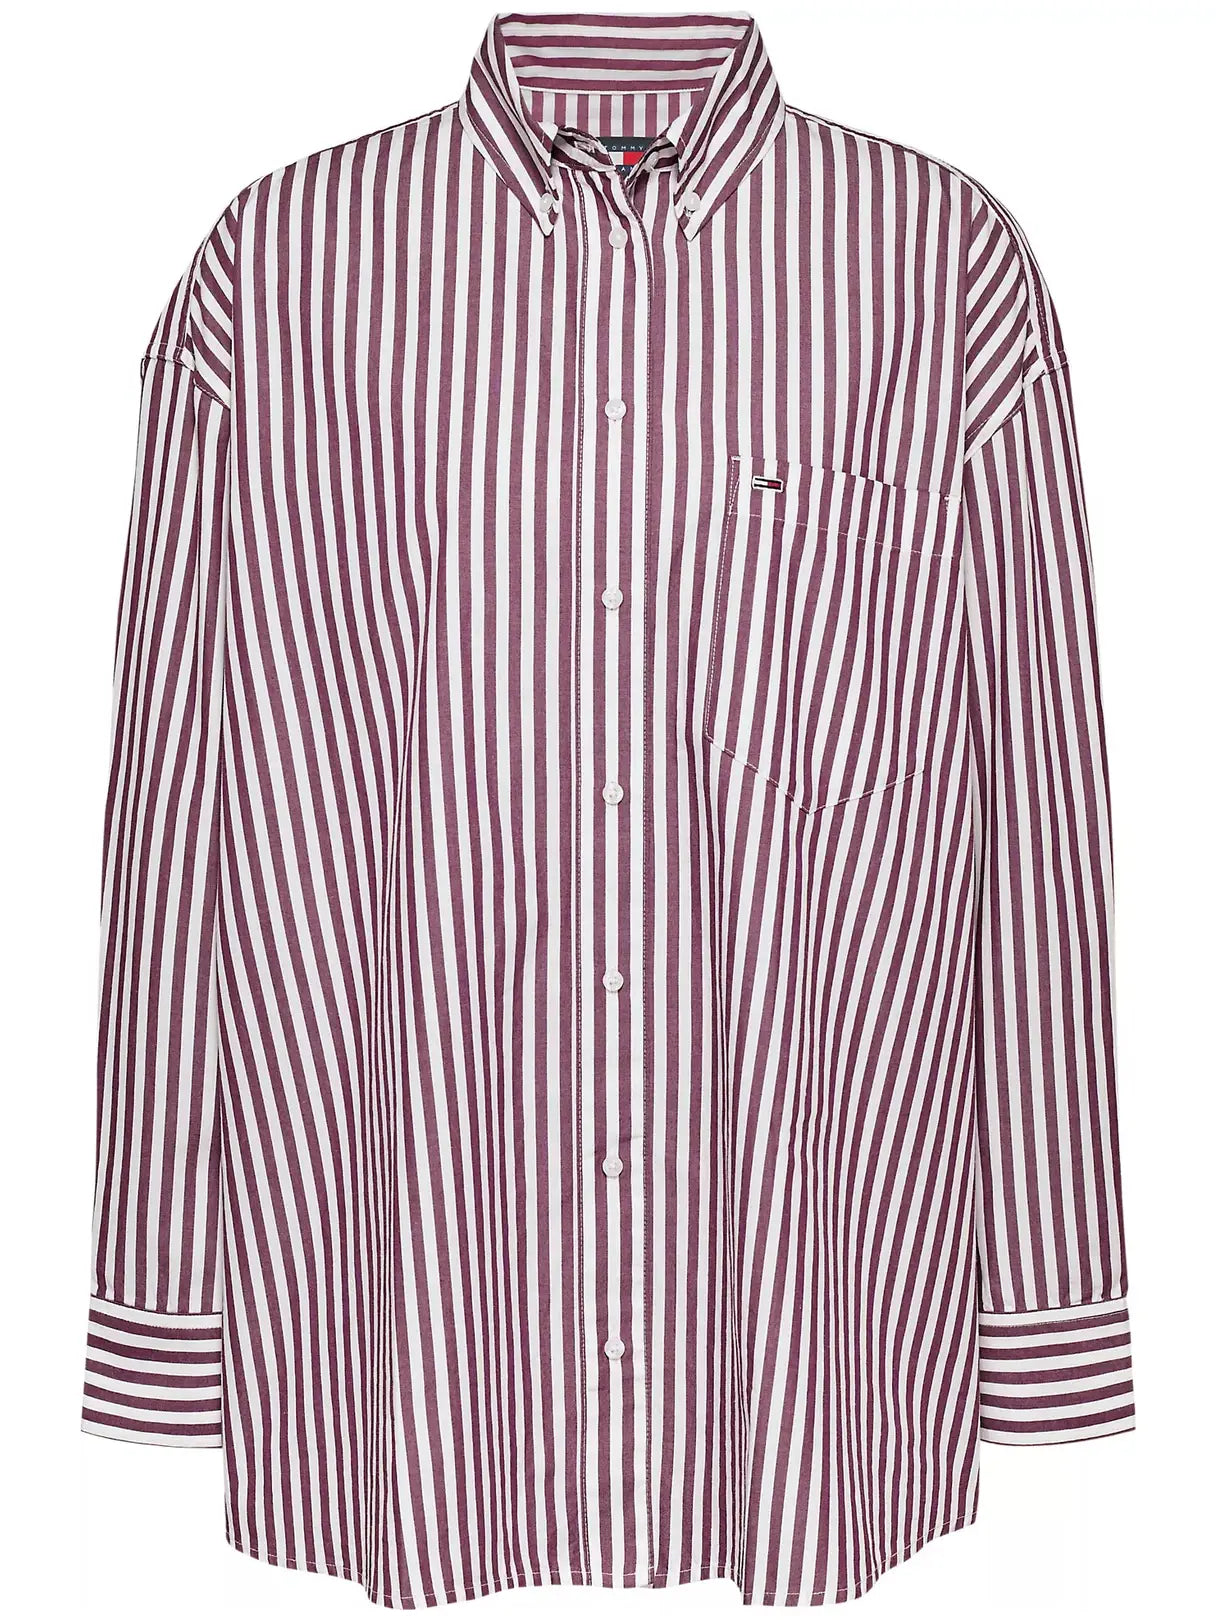 TJW oversized pinstripe blouse - valley grape / stripe